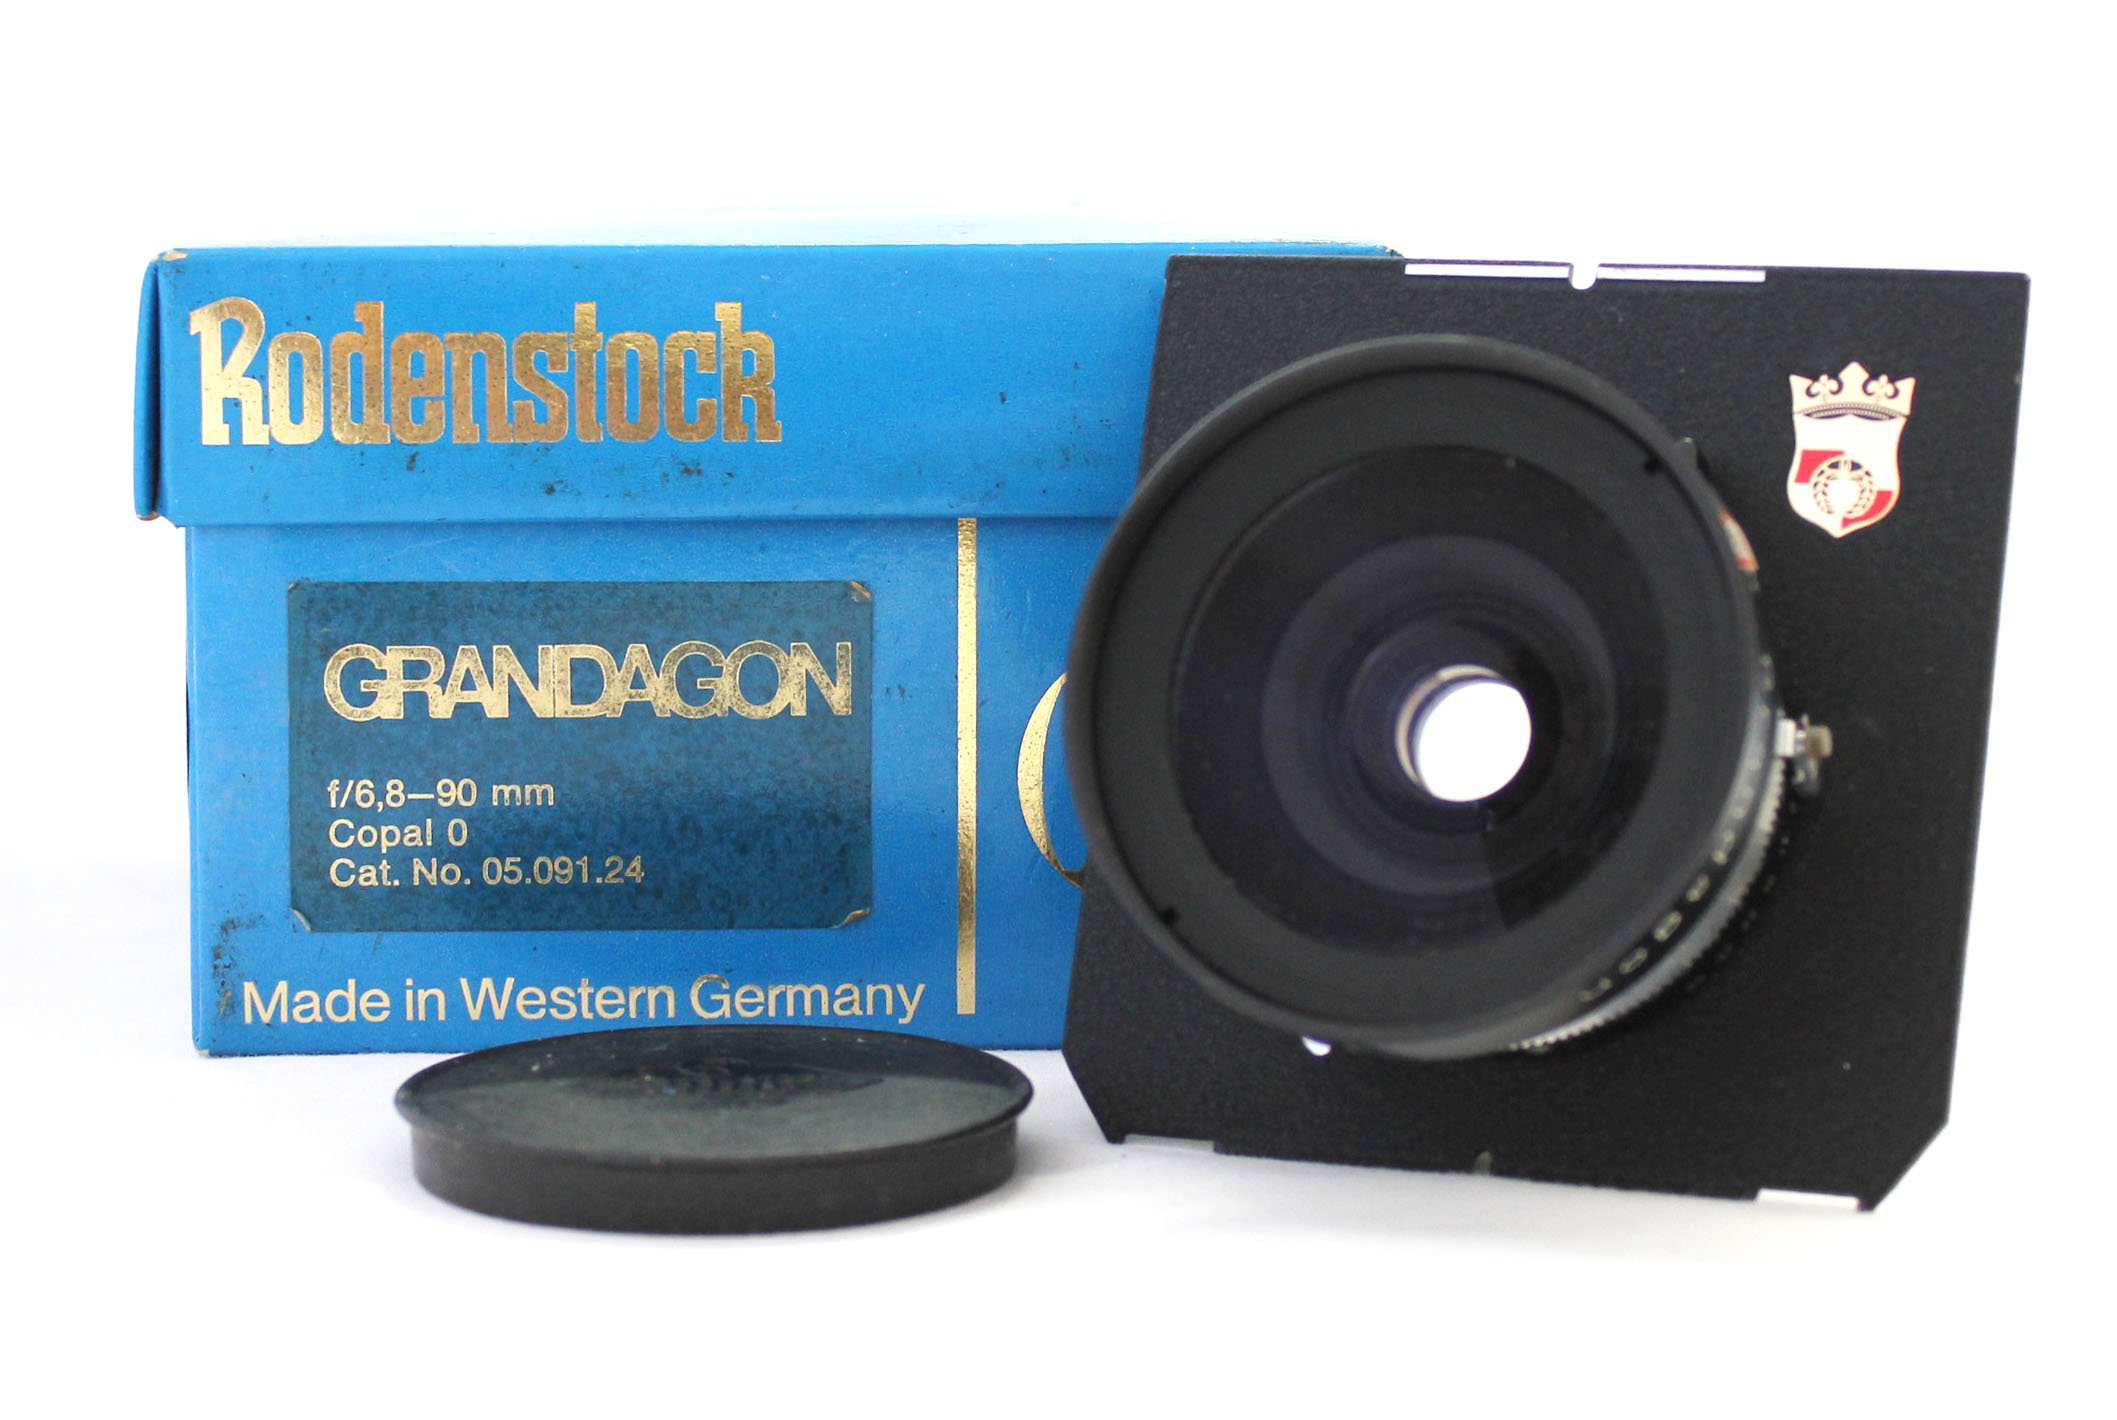 Japan Used Camera Shop | Rodenstock Grandagon 90mm F/6.8 Lens Copal No.0 Shutter in Box from Japan